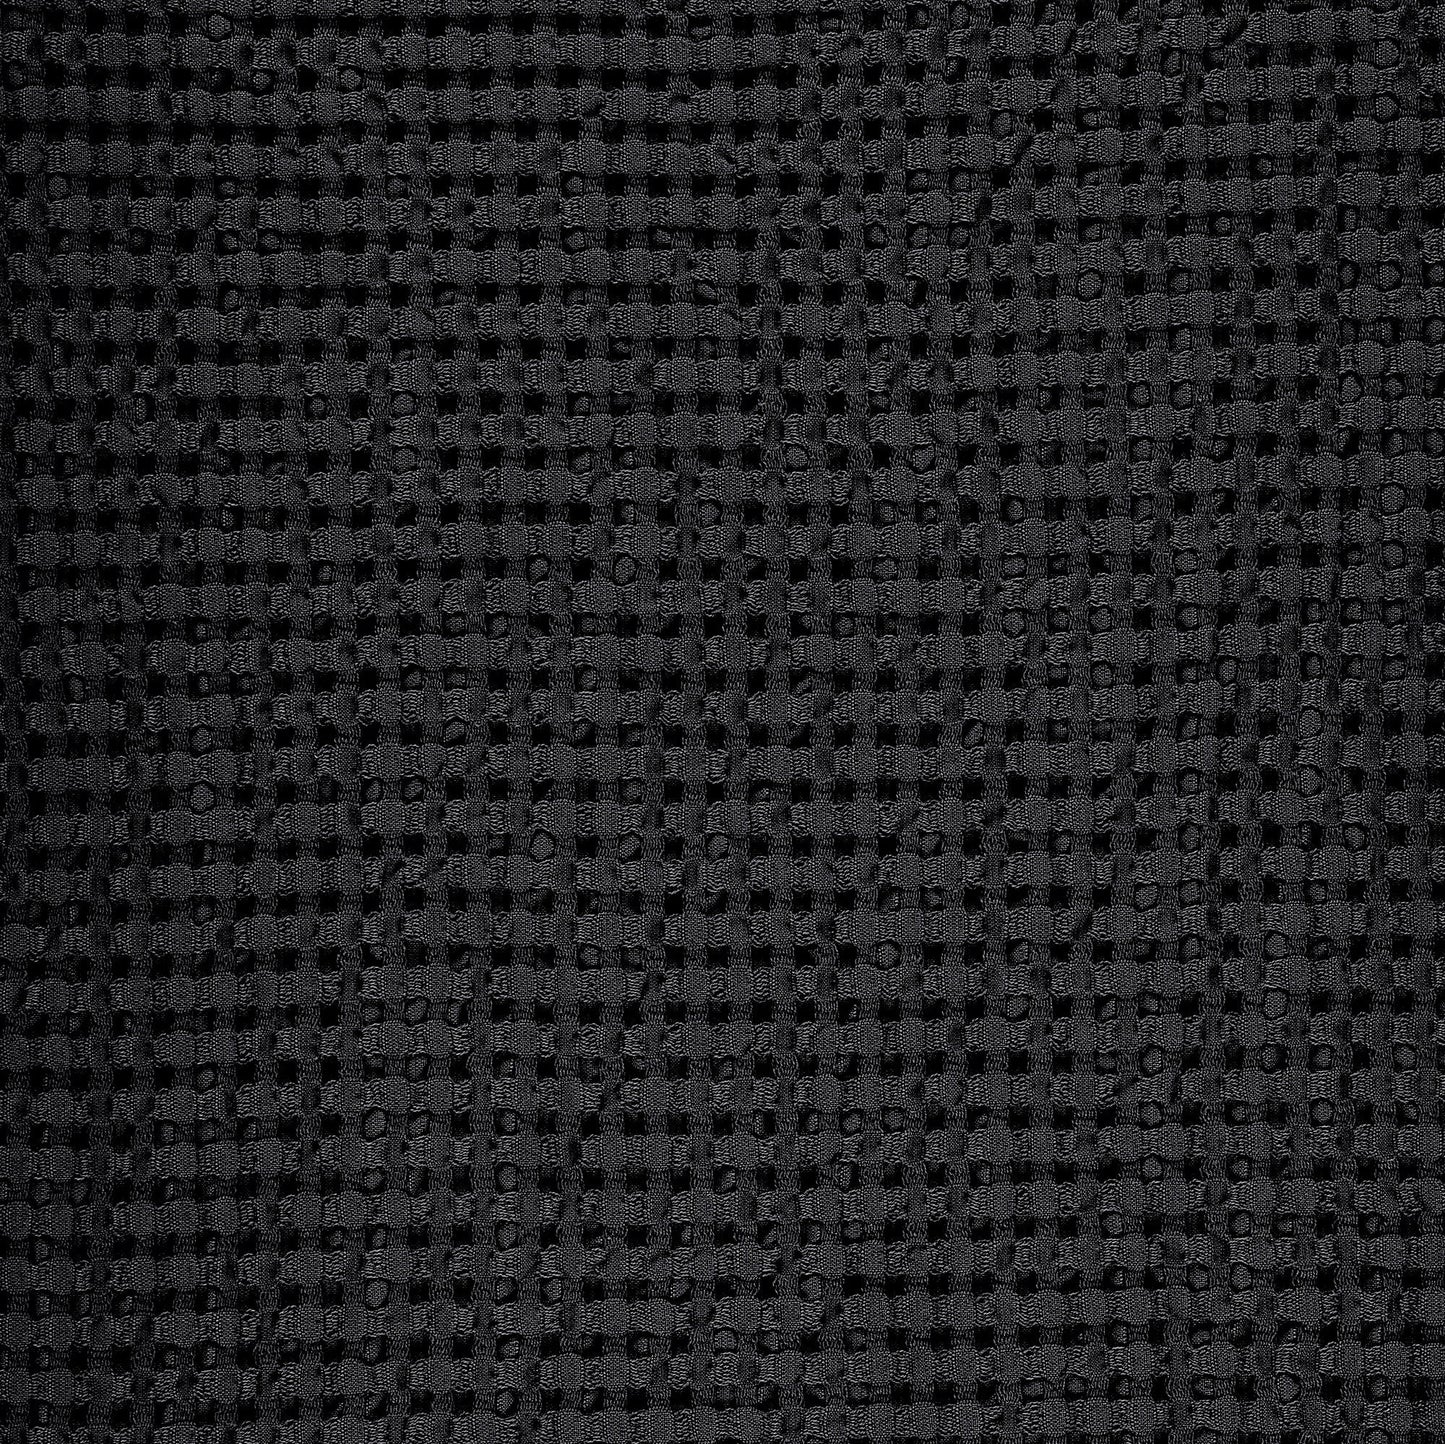 Pousada Waffle Retro Design Egyptian Cotton Towels - 990 Black - |VESIMI Design| Luxury and Rustic bathrooms online